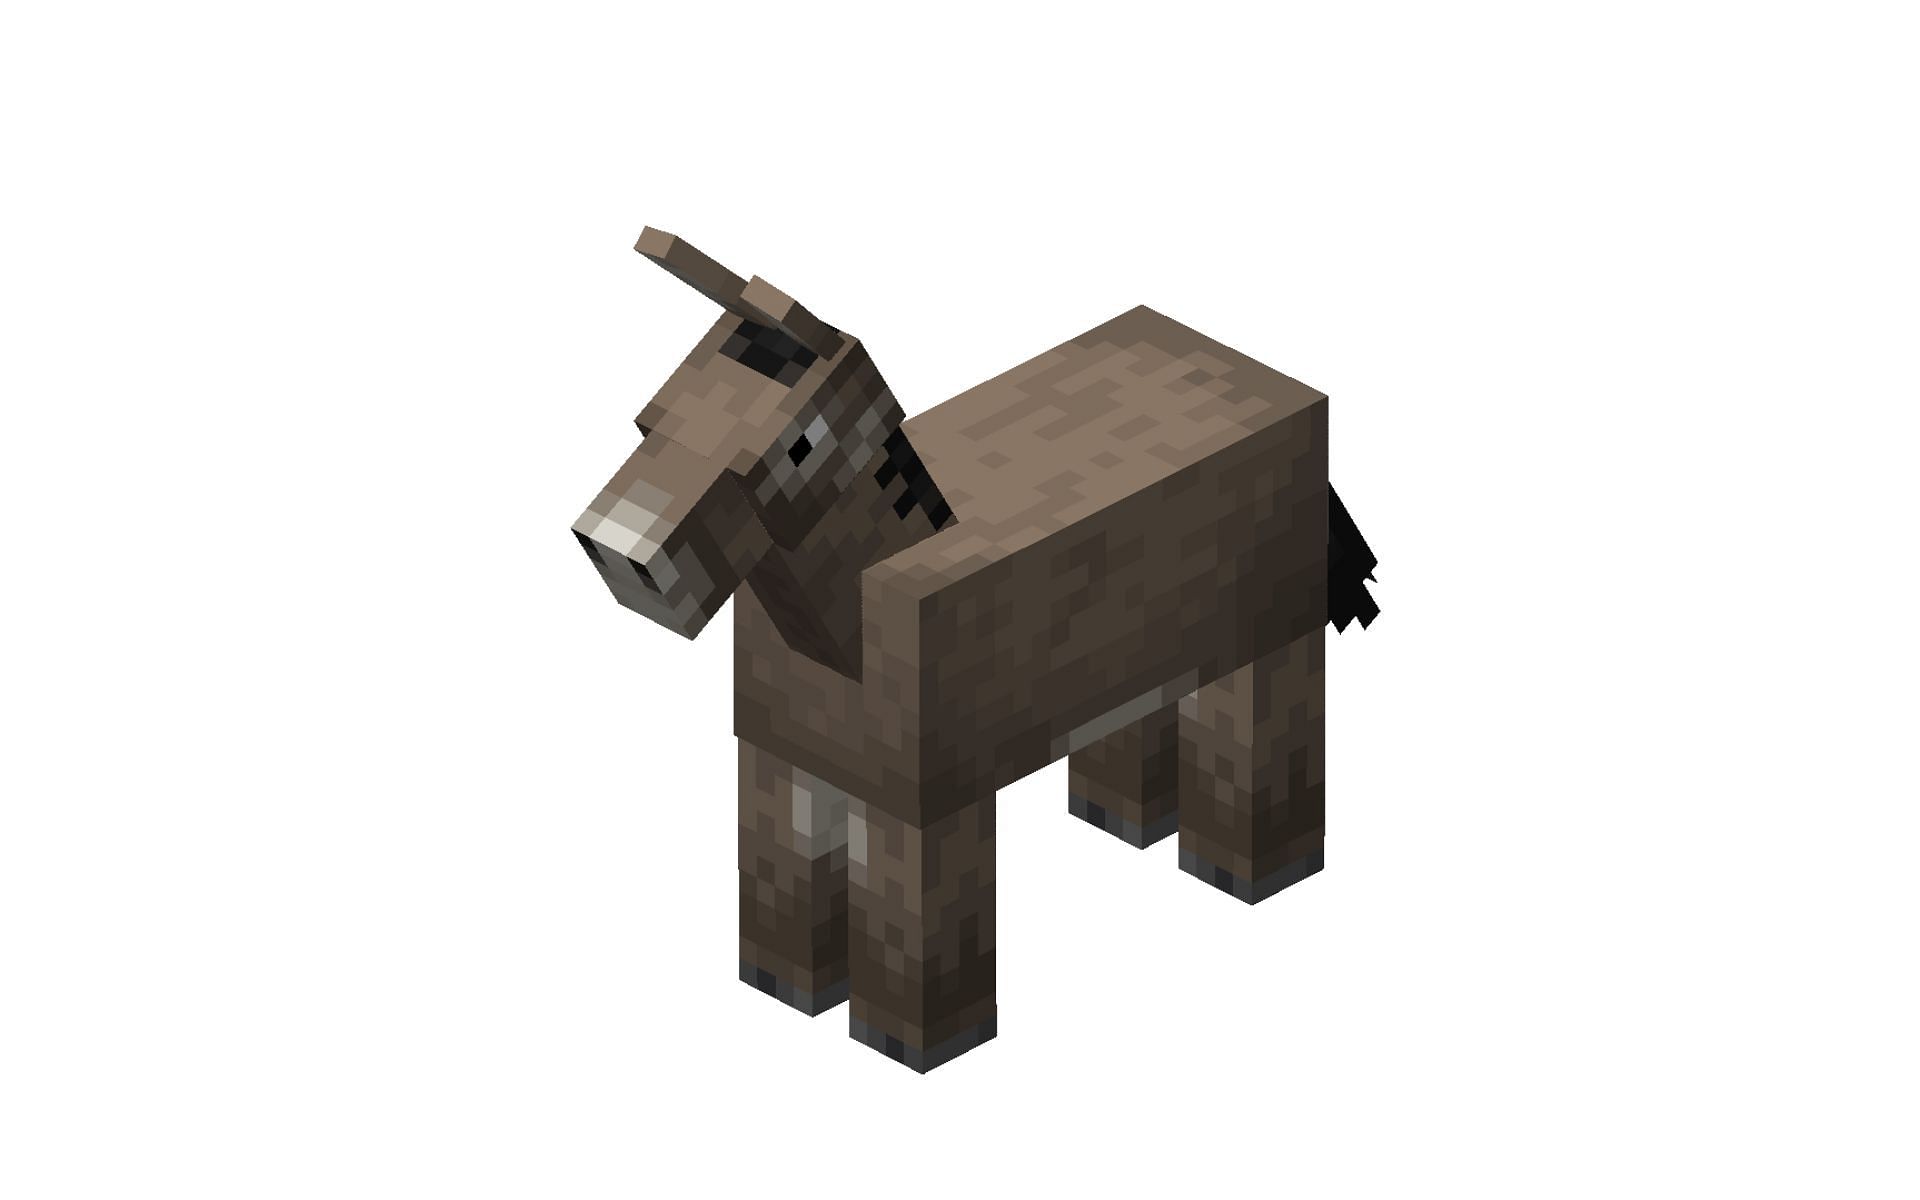 In-game model of the Donkey (Image via Fandom)